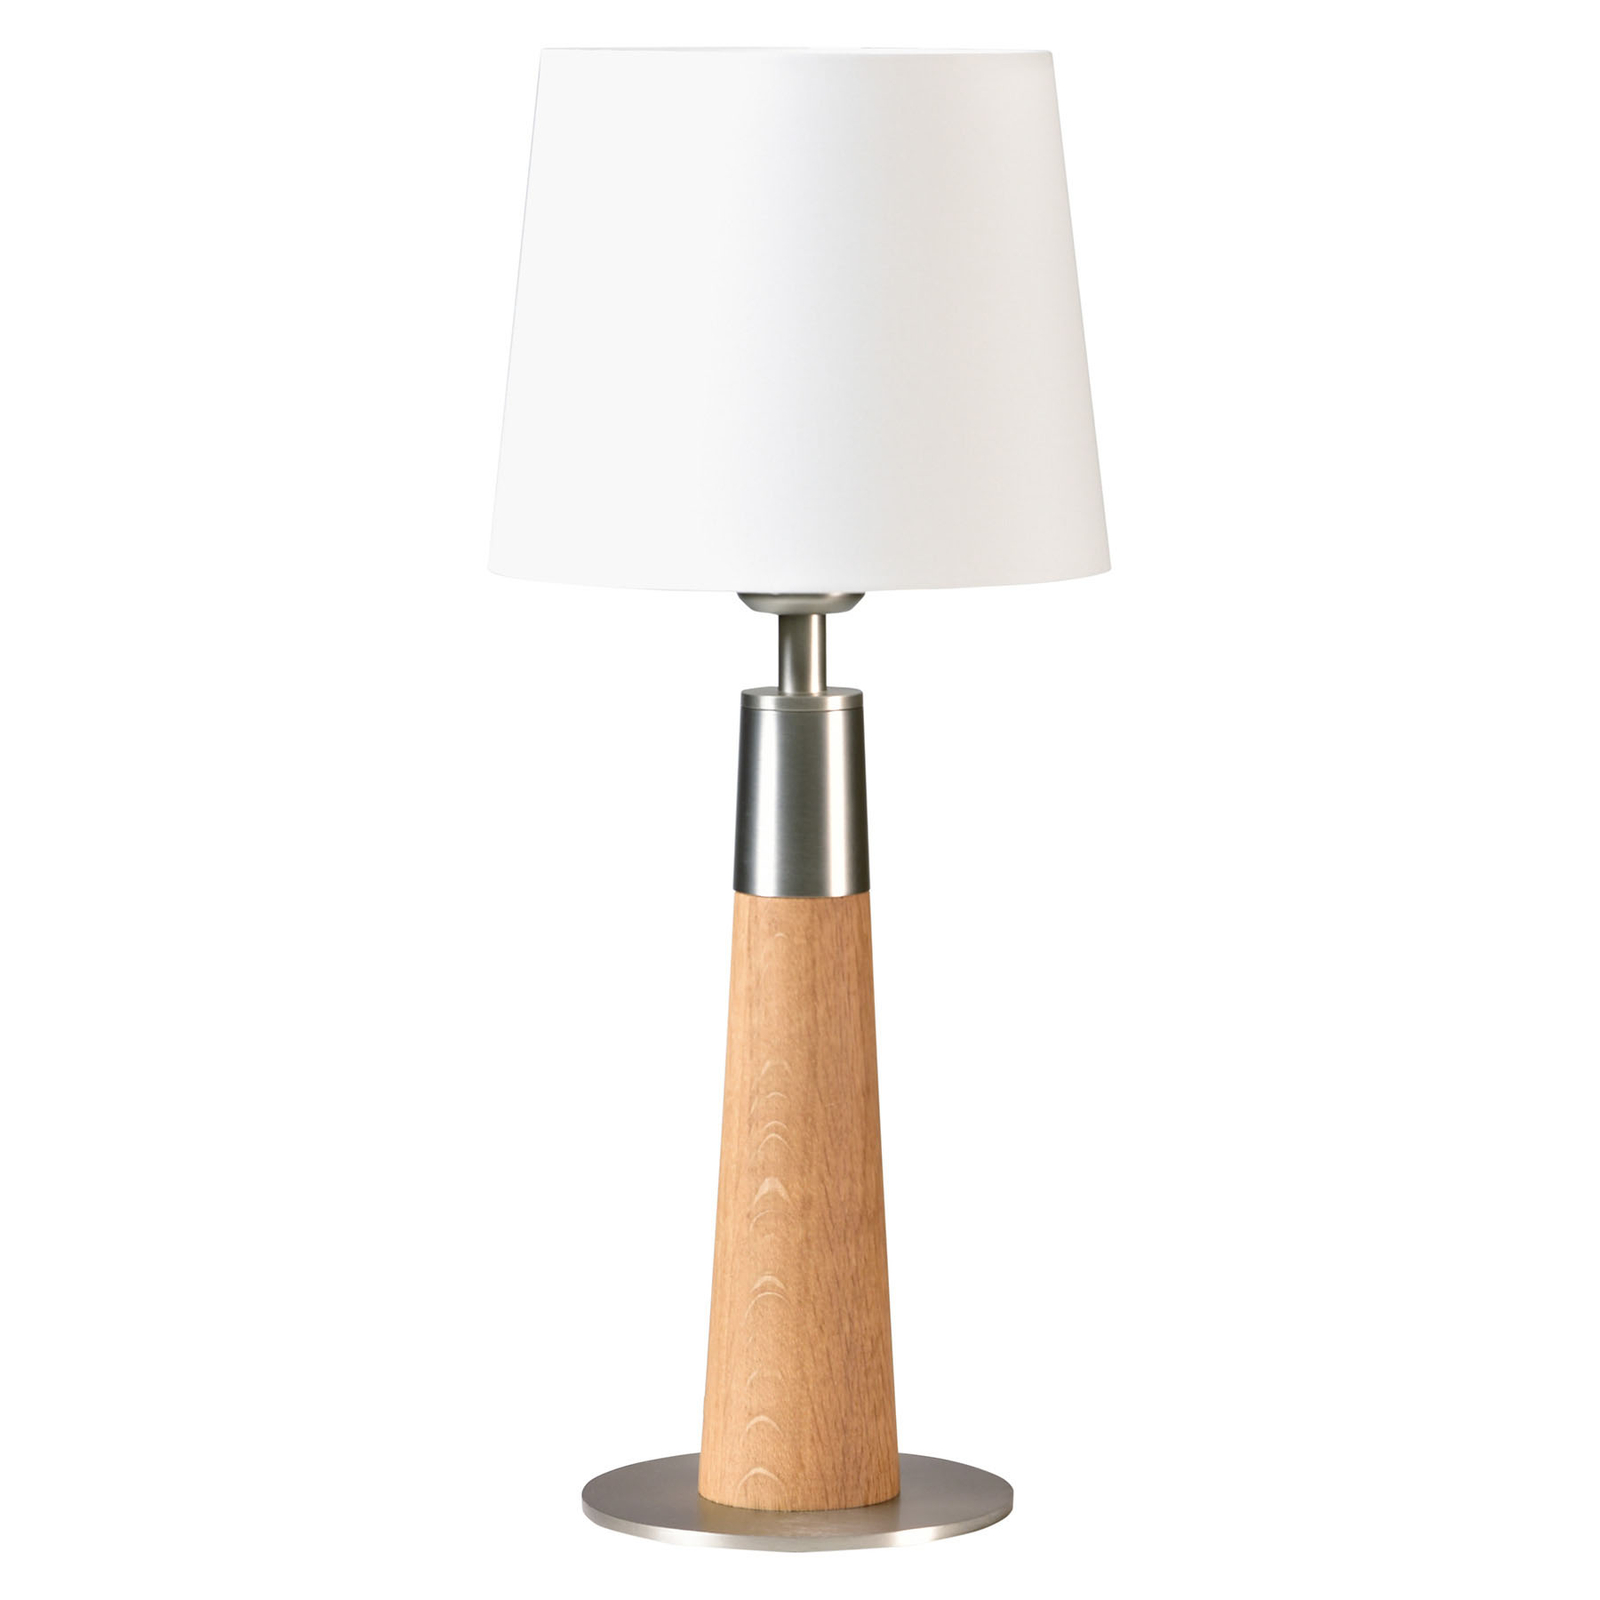 HerzBlut Conico stolní lampa bílá, dub olej, 44cm